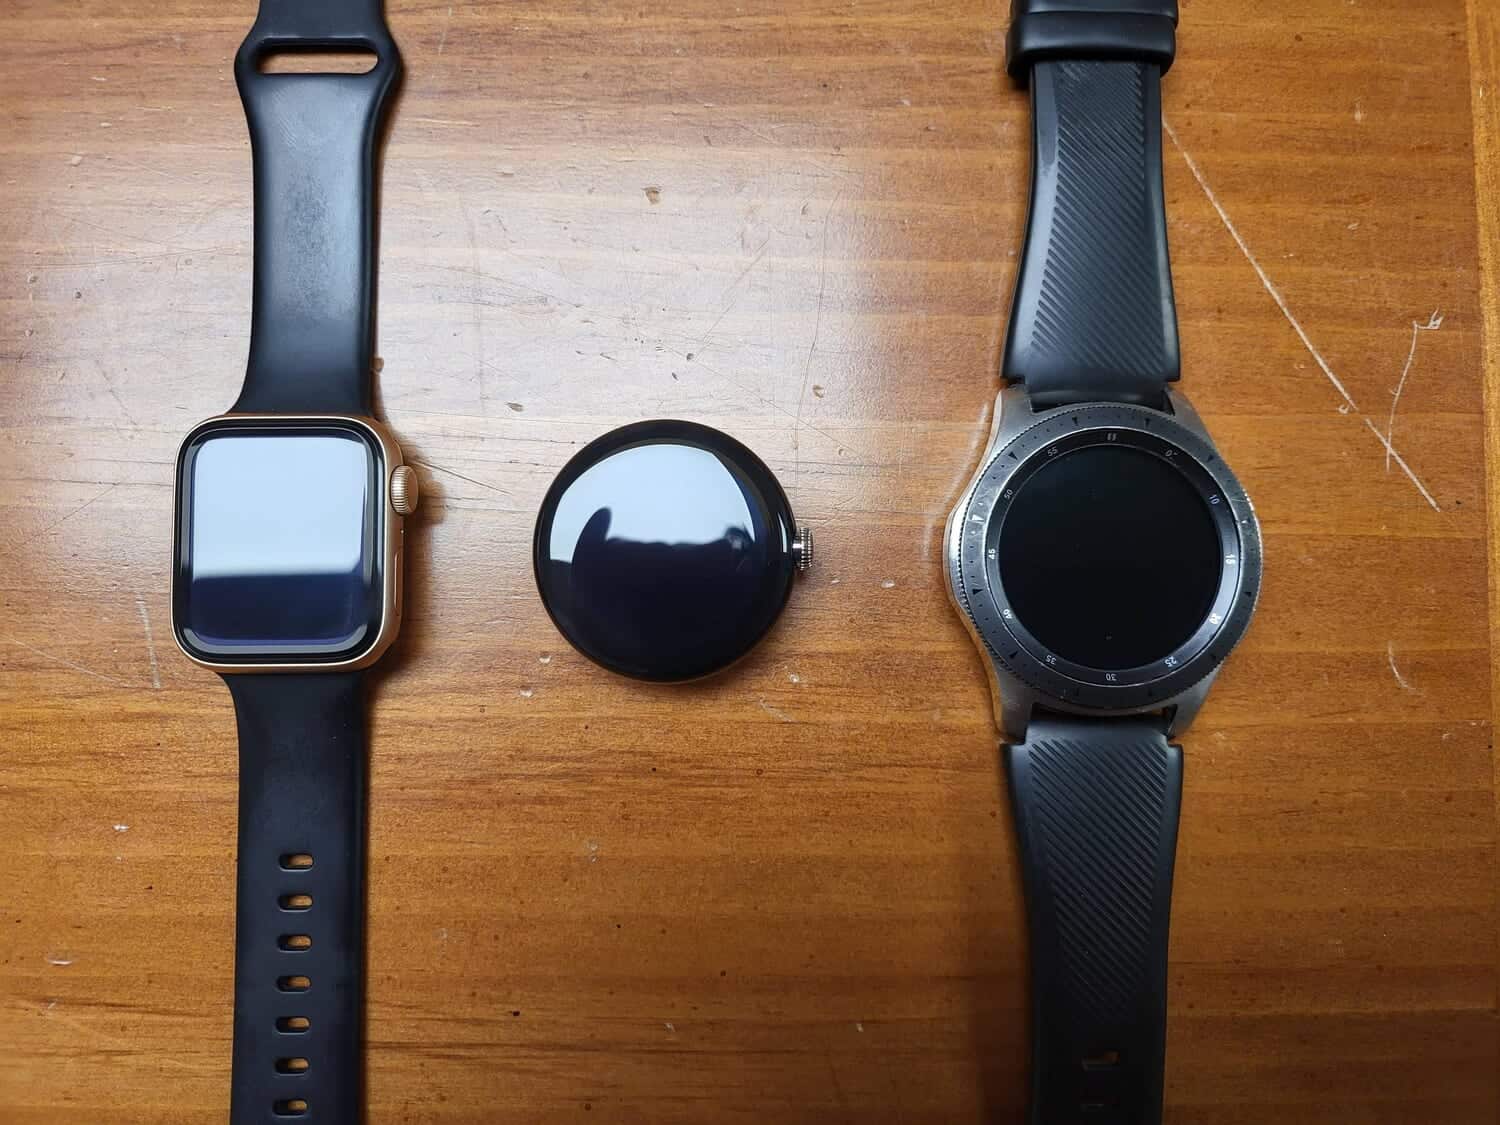 Google Pixel Watch（仮称）のサイズ感はこんな感じ？ – リークした実機とApple Watchとの比較写真が公開